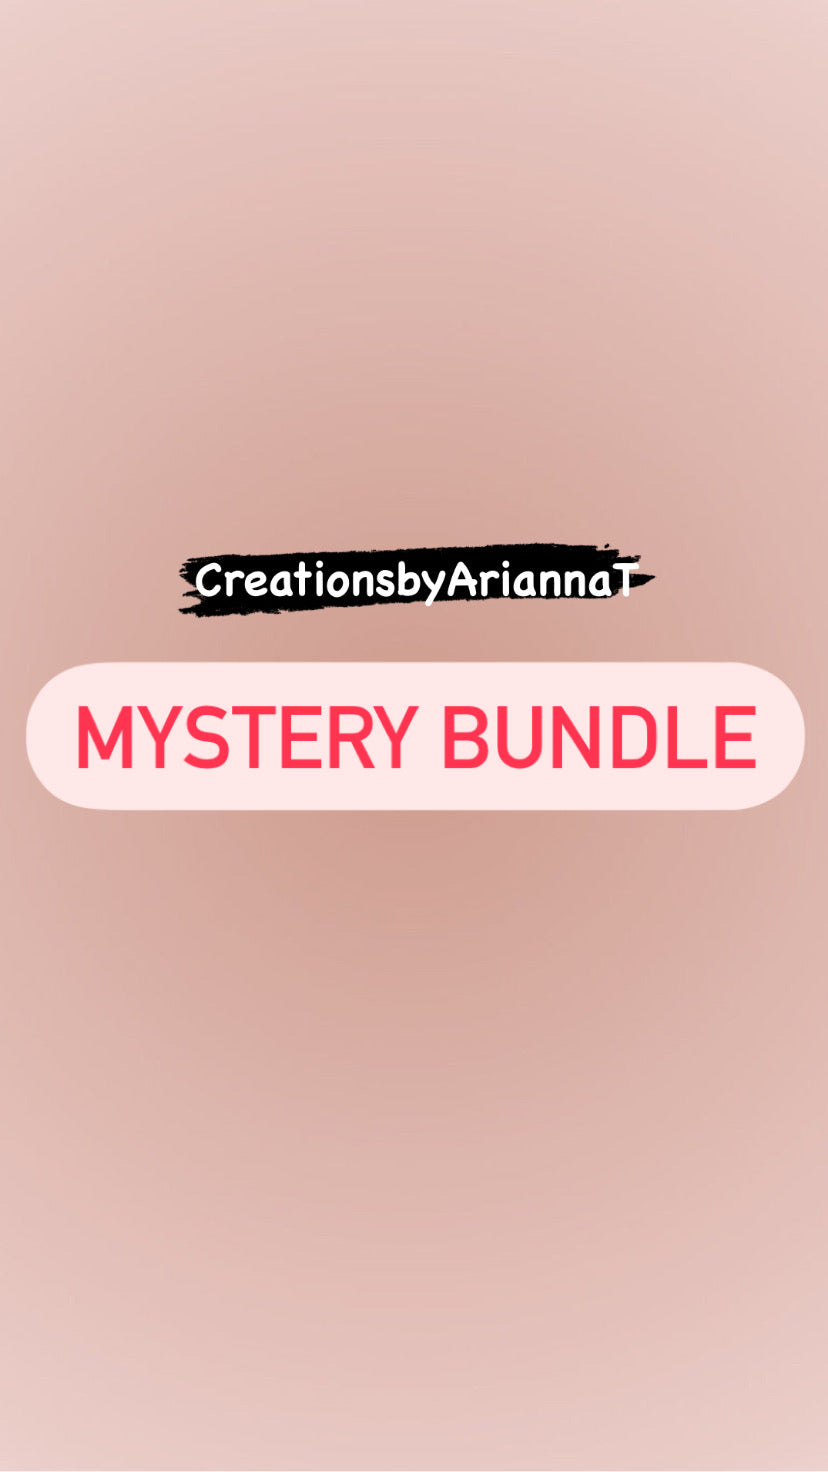 Mystery items